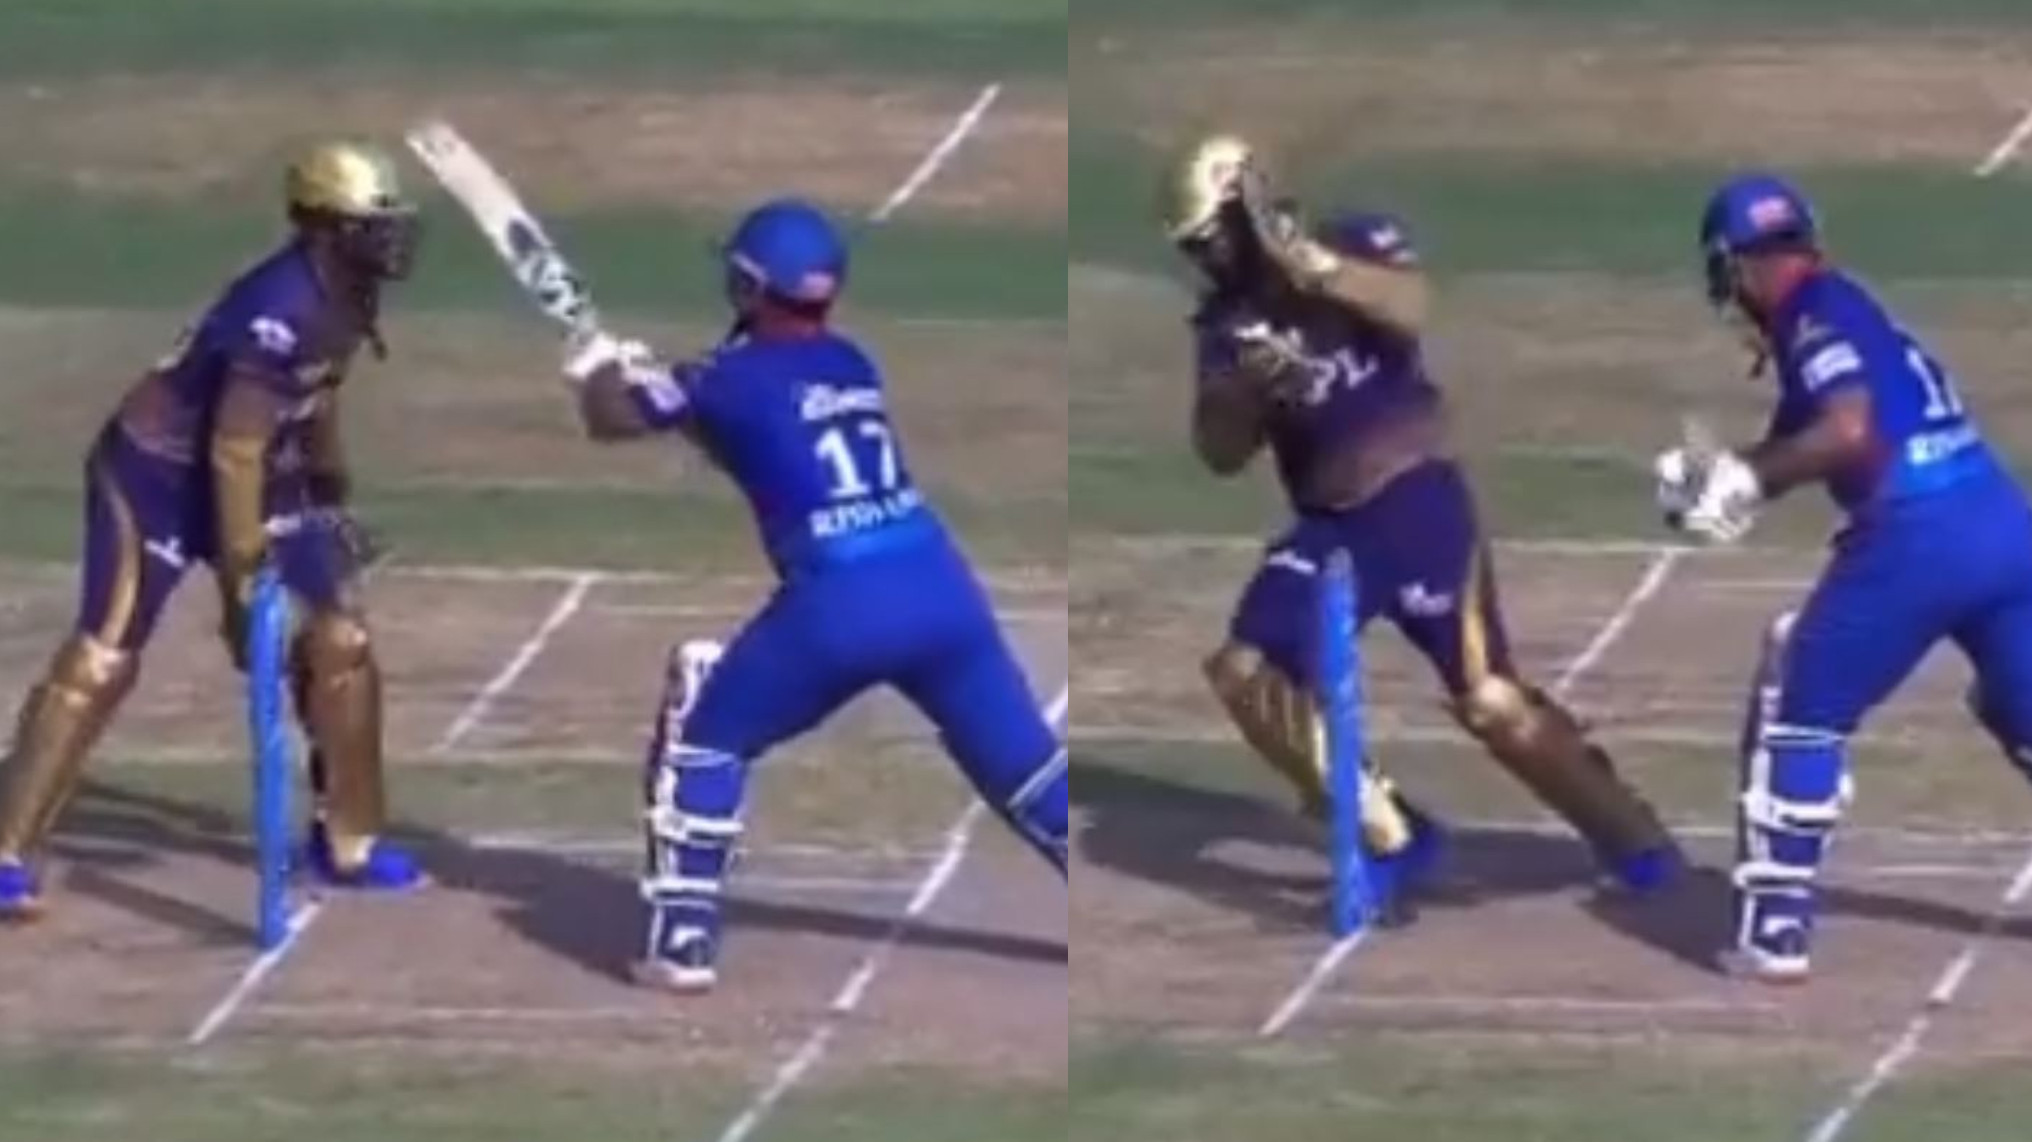 IPL 2021: WATCH- Rishabh Pant almost takes Dinesh Karthik’s head off with his bat